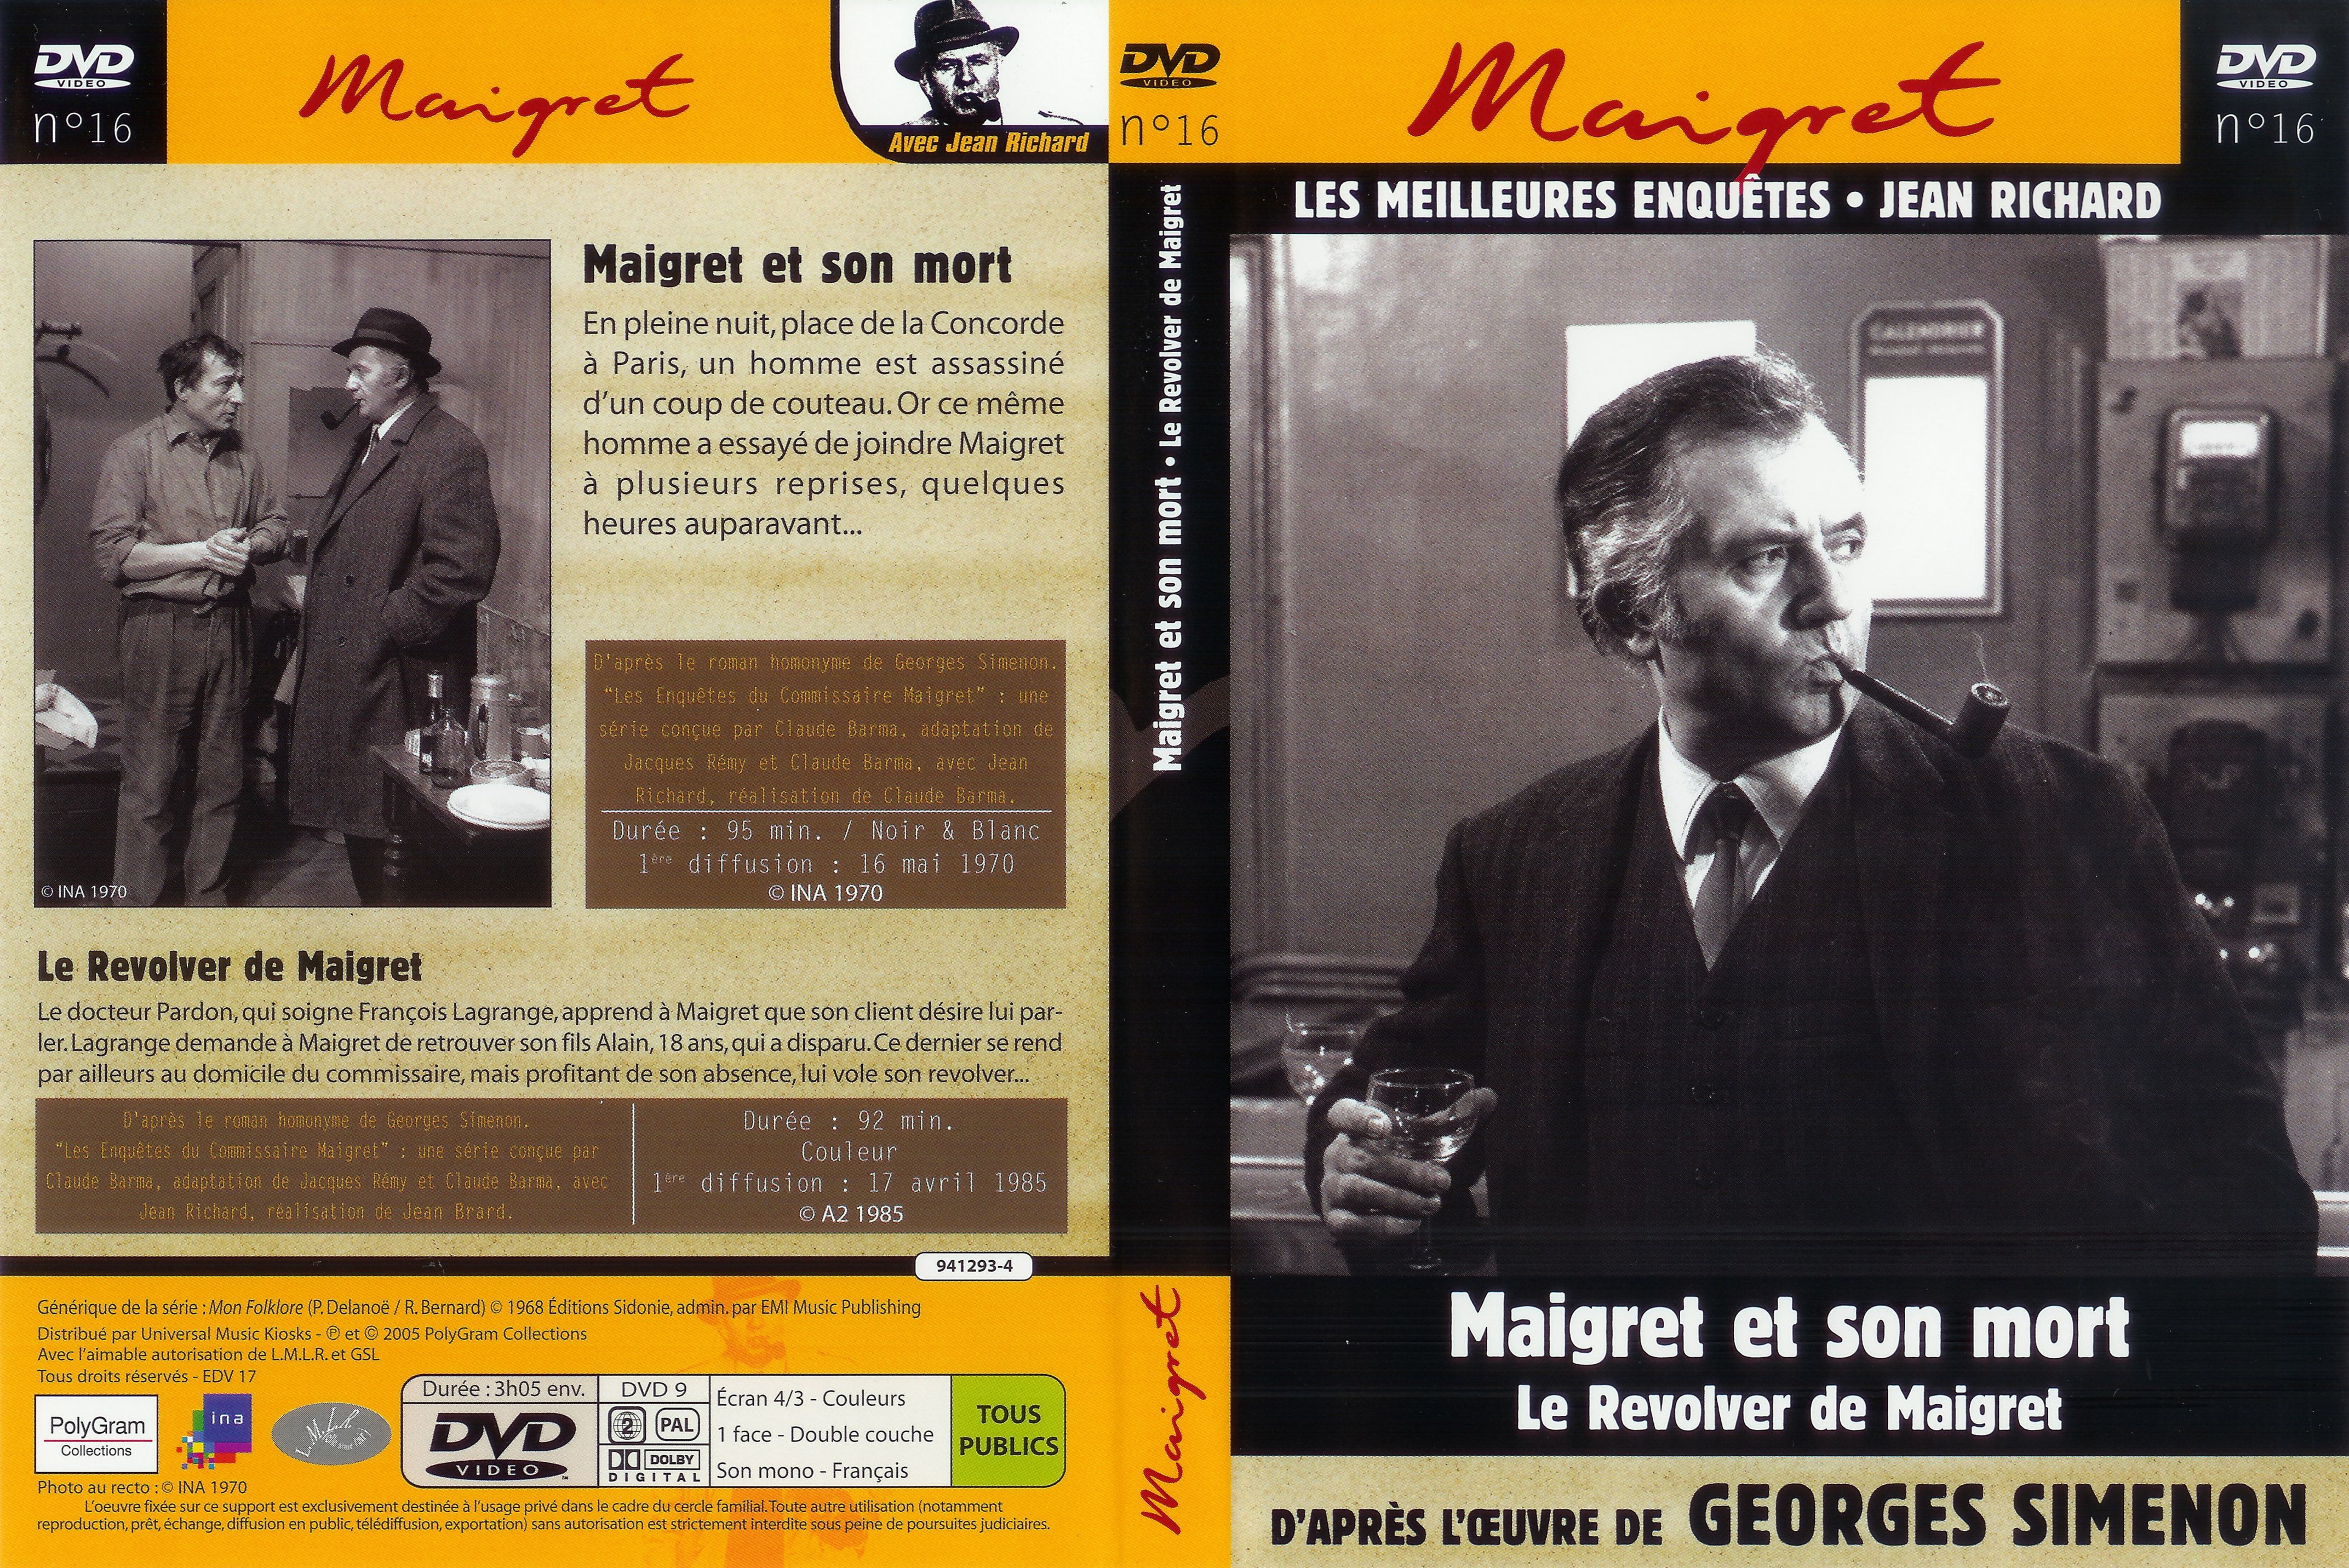 Jaquette DVD Maigret (Jean Richard) vol 16